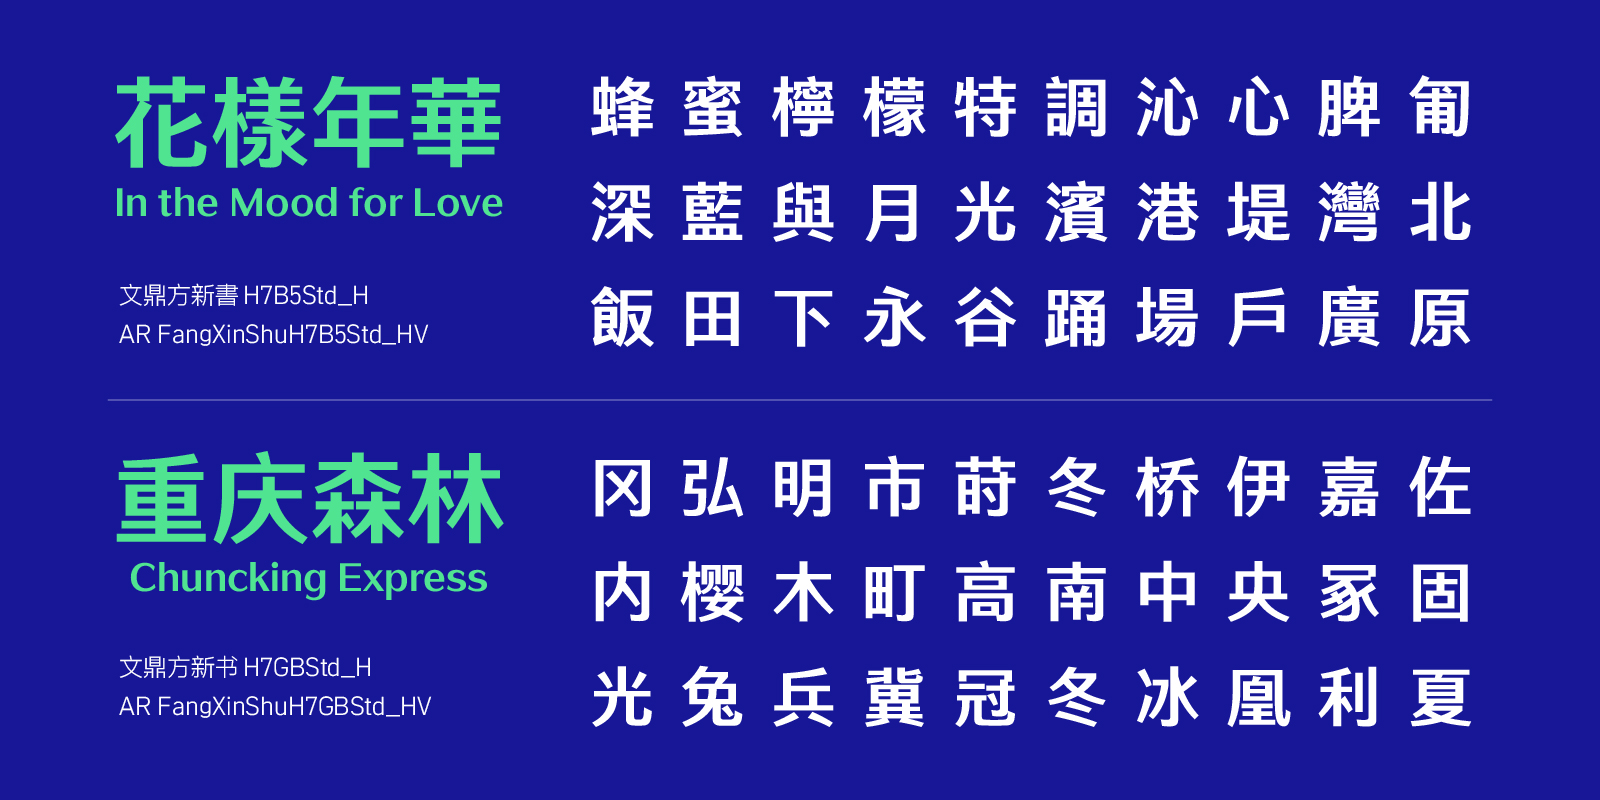 Card displaying AR FangXinShuH7B5Std typeface in various styles